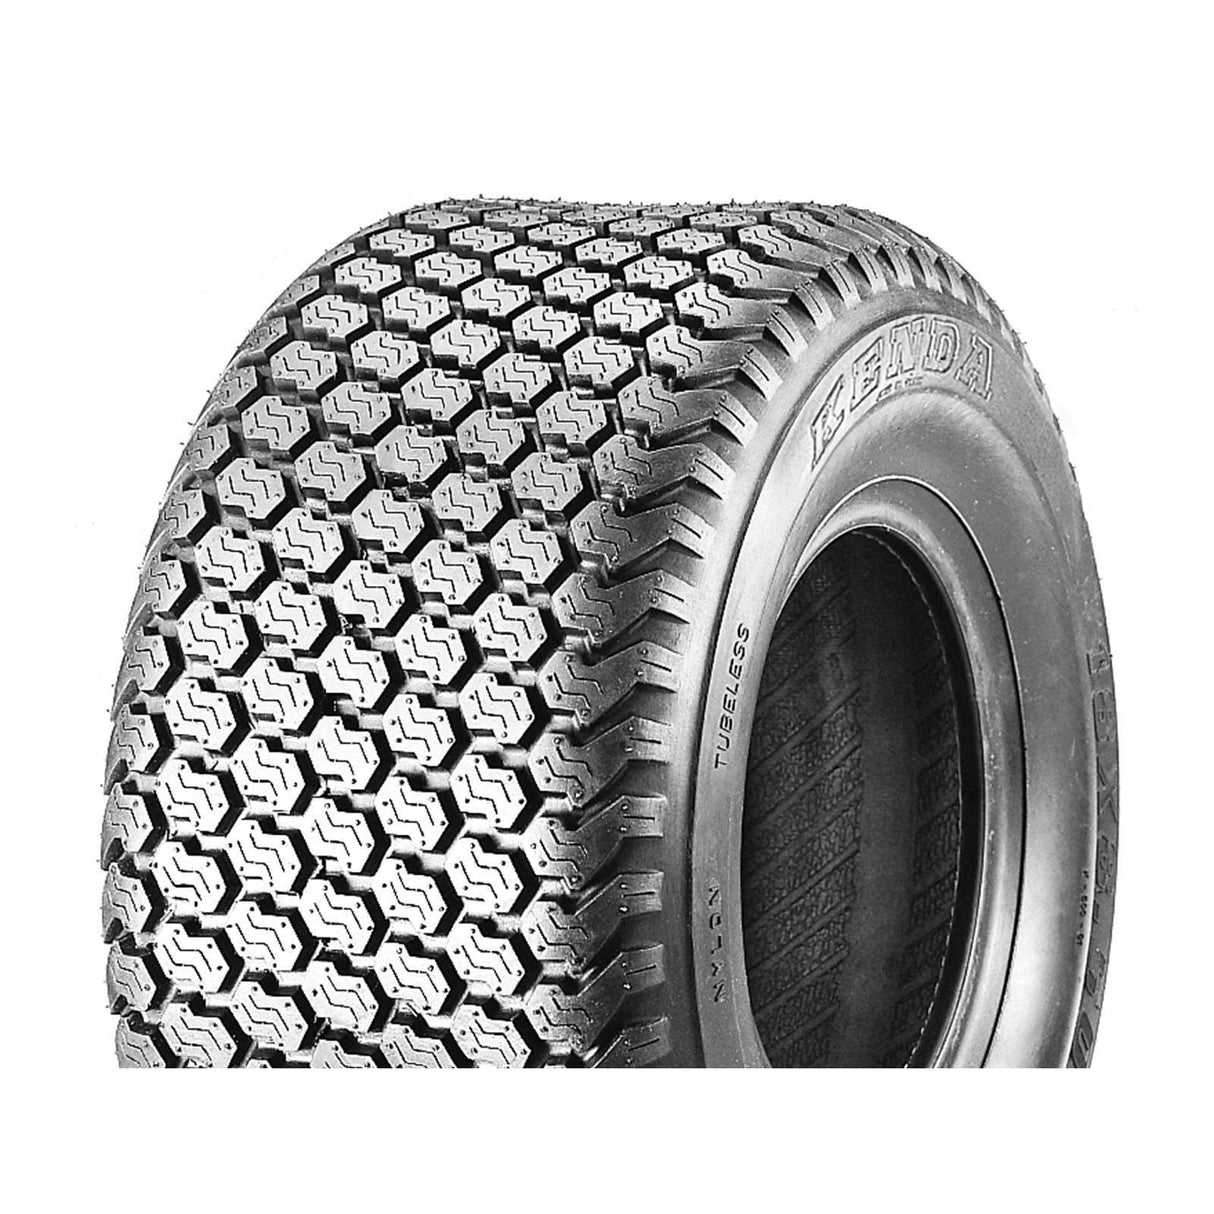 18x10.50-10 K500 (4 PLY) Kenda Super Turf Mower Tyre